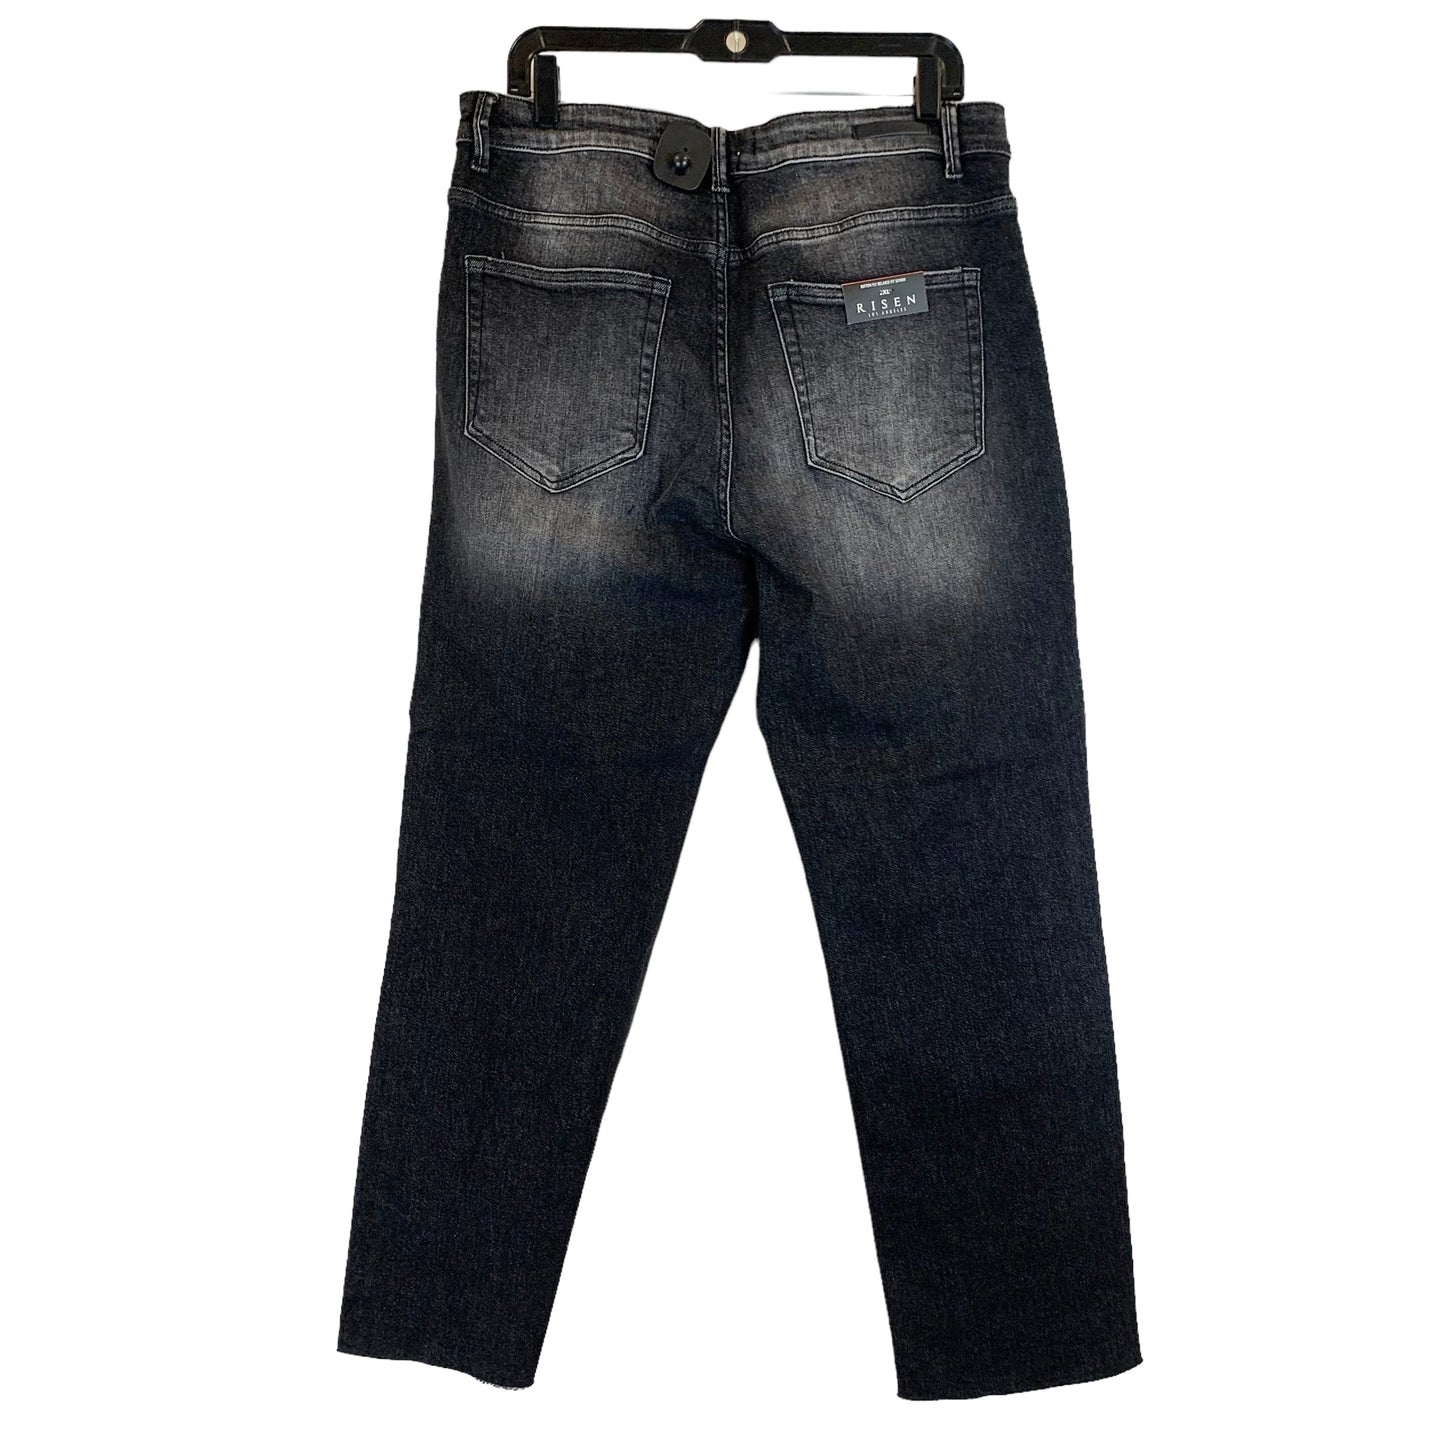 Black Denim Jeans Skinny Risen, Size 14